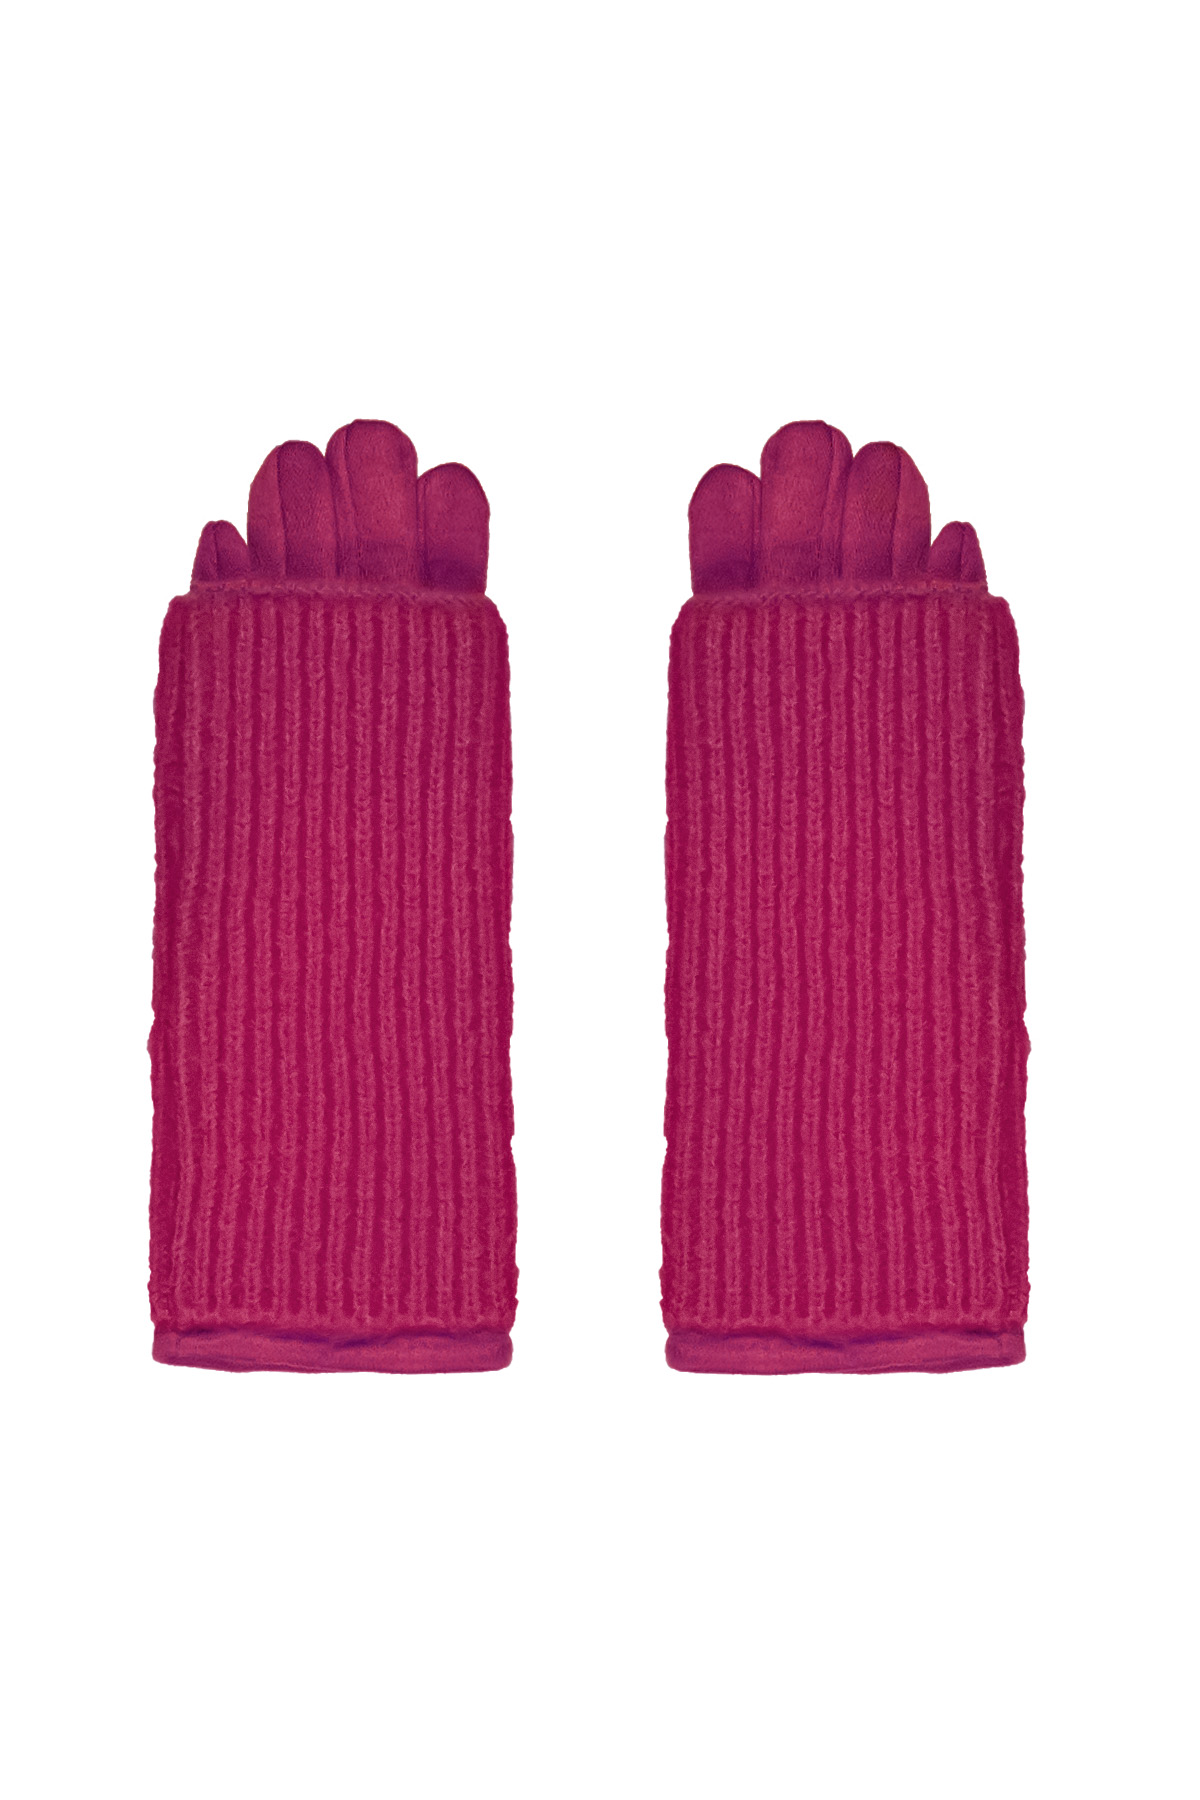 Handschuhe doppelschichtig - fuchsia